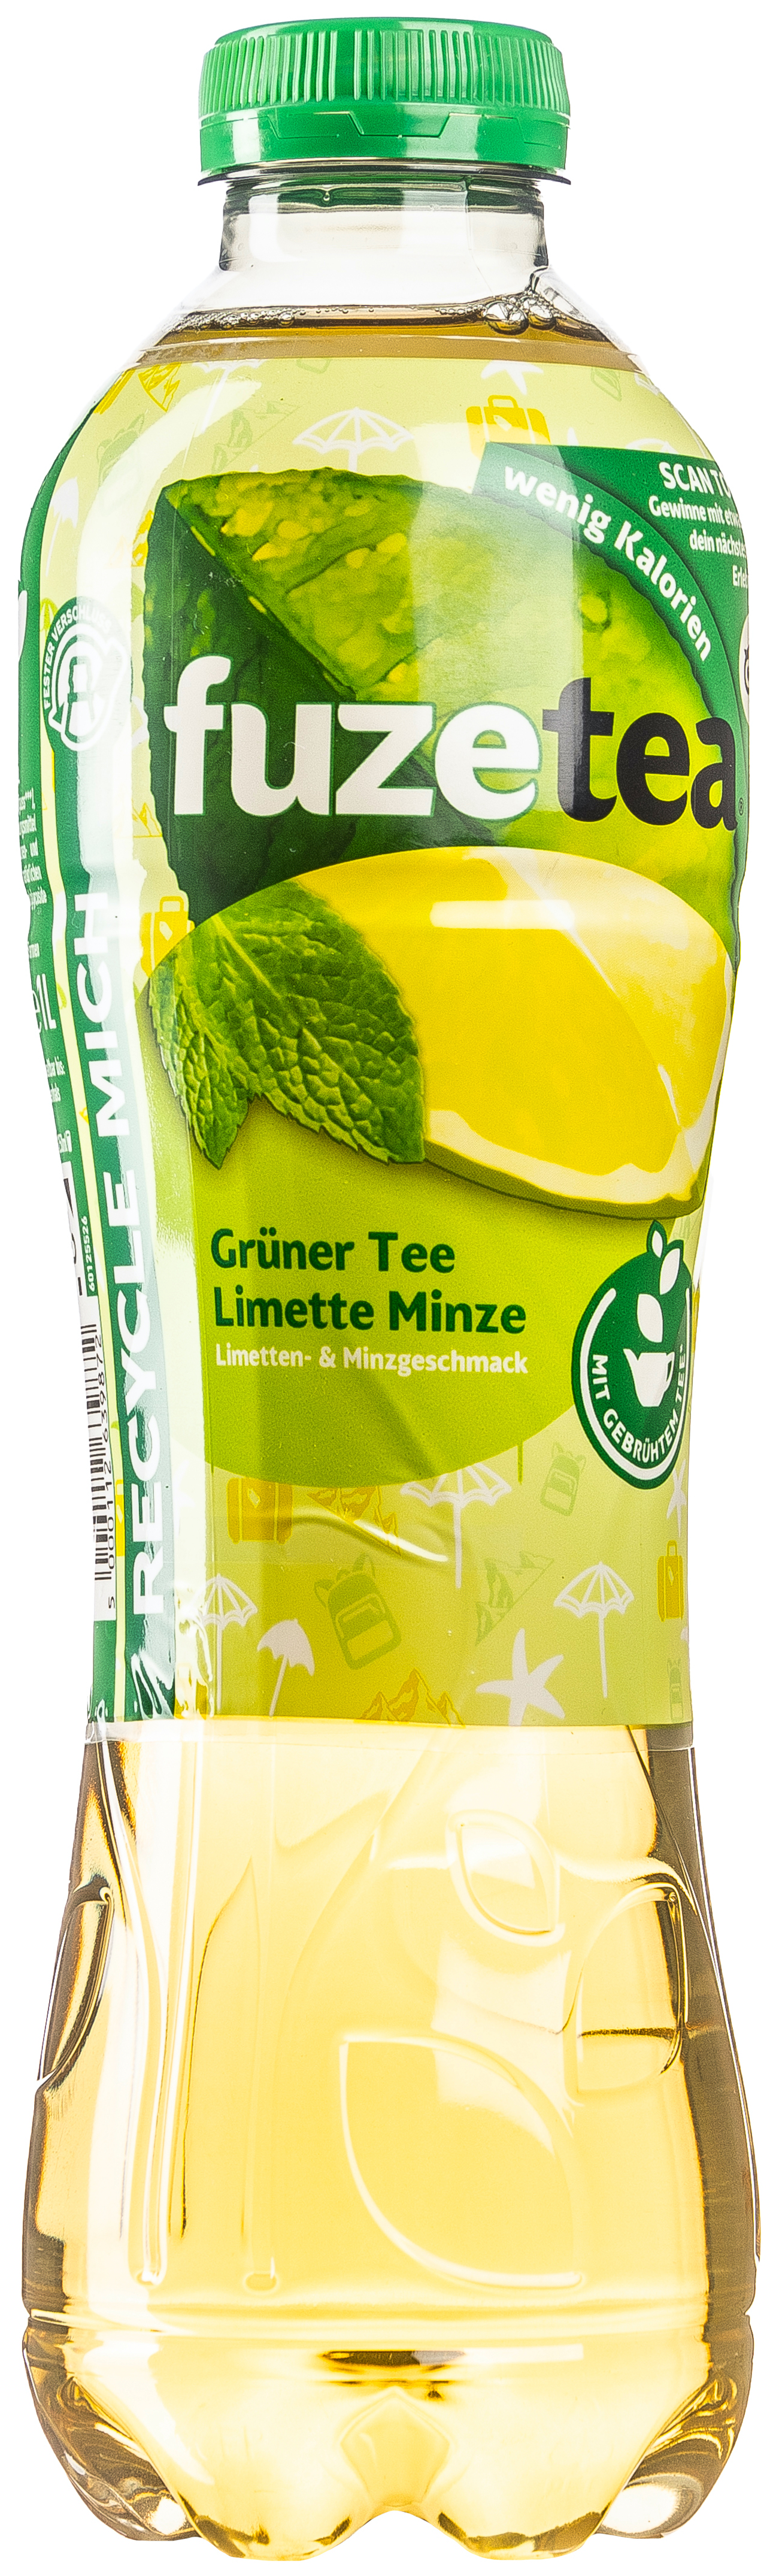 Fuze Tea Limette Minze 1,0L EINWEG